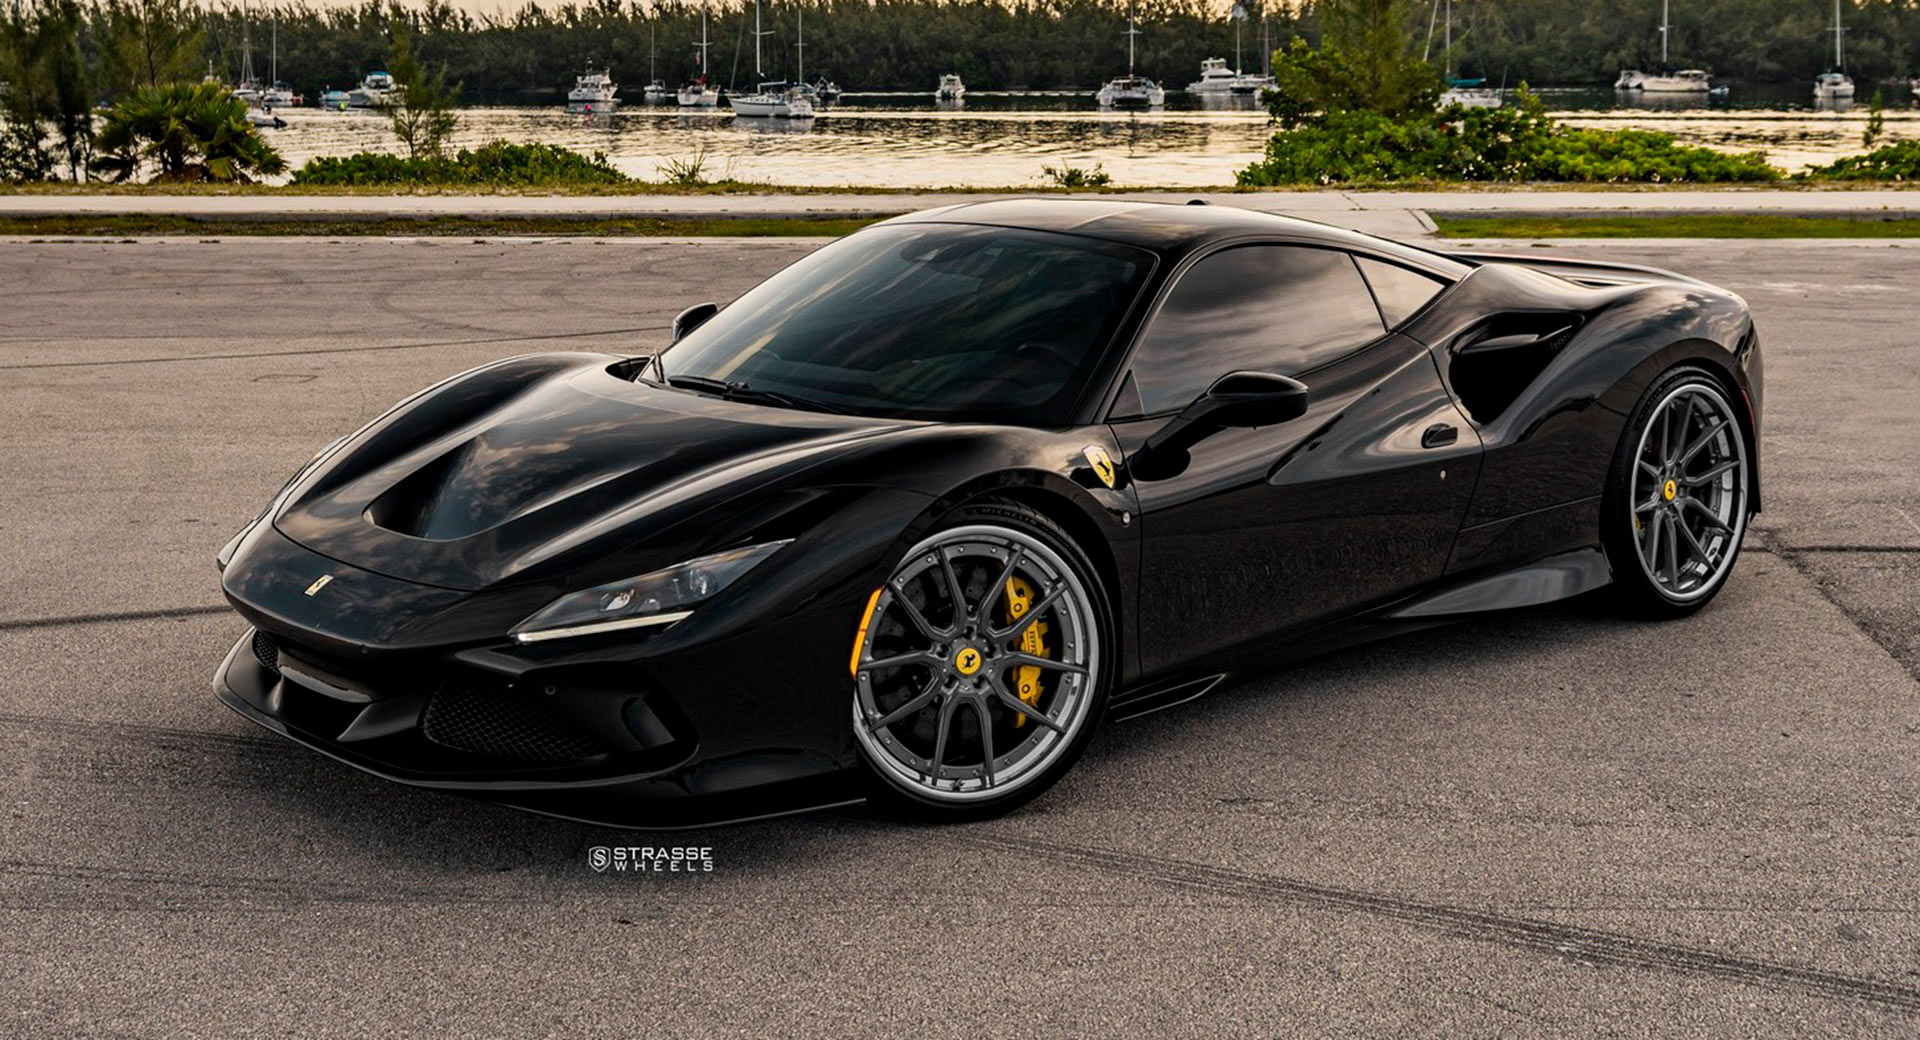 Pitch Black Ferrari F8 Tributo Looks Good With Dark Multi-Spoke